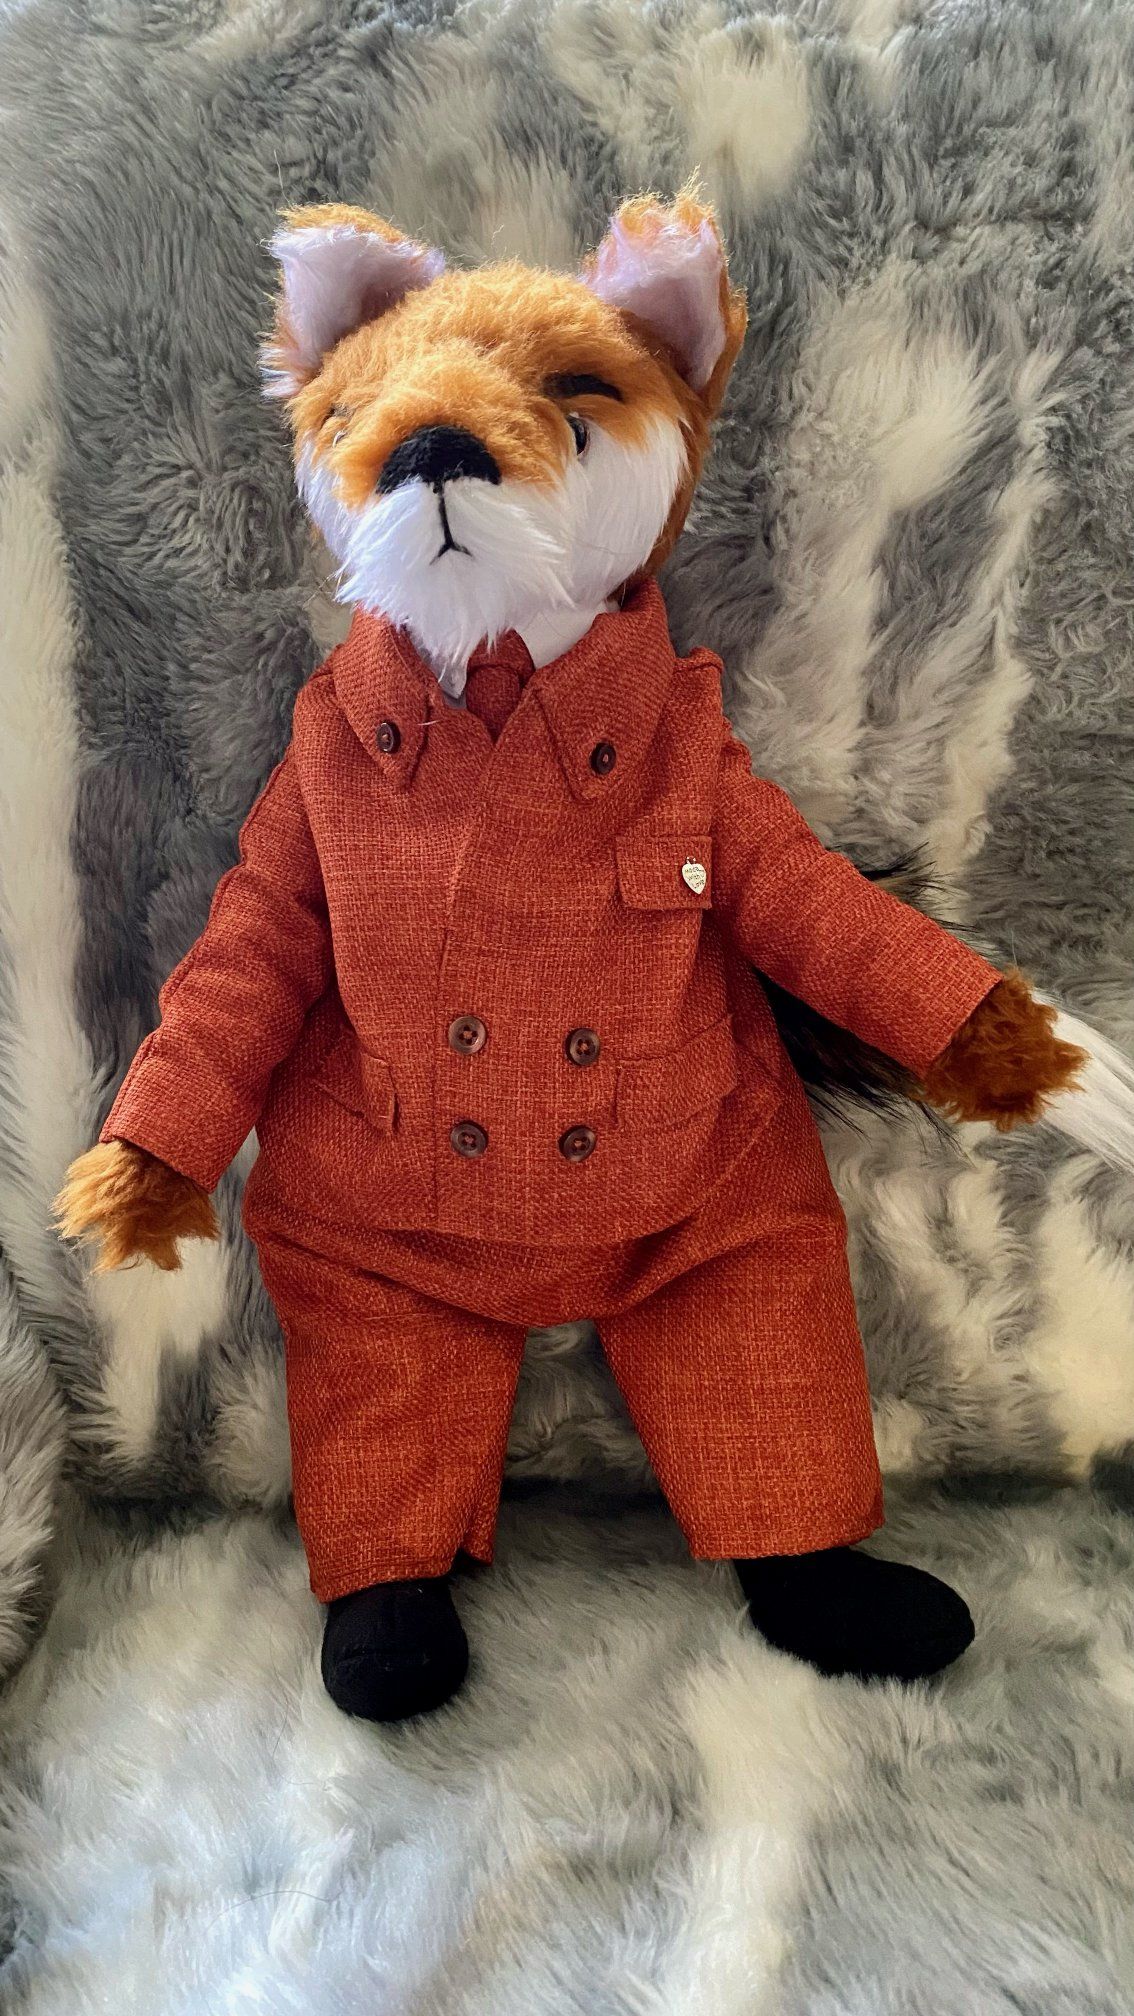 Mr Fox by Sharon